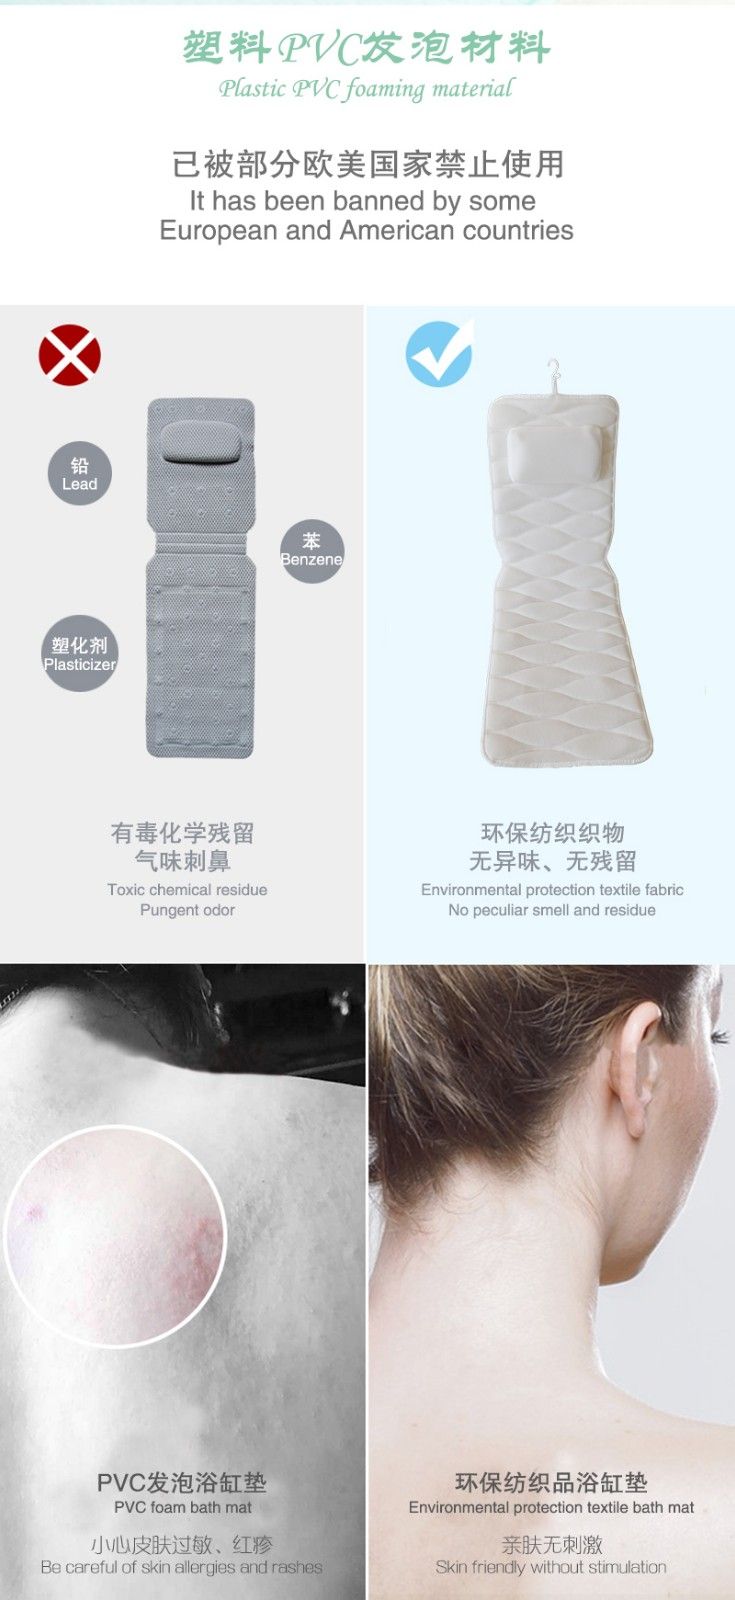 Amazon Best Seller Washable And Luxury Full Body Bath Cushion from China